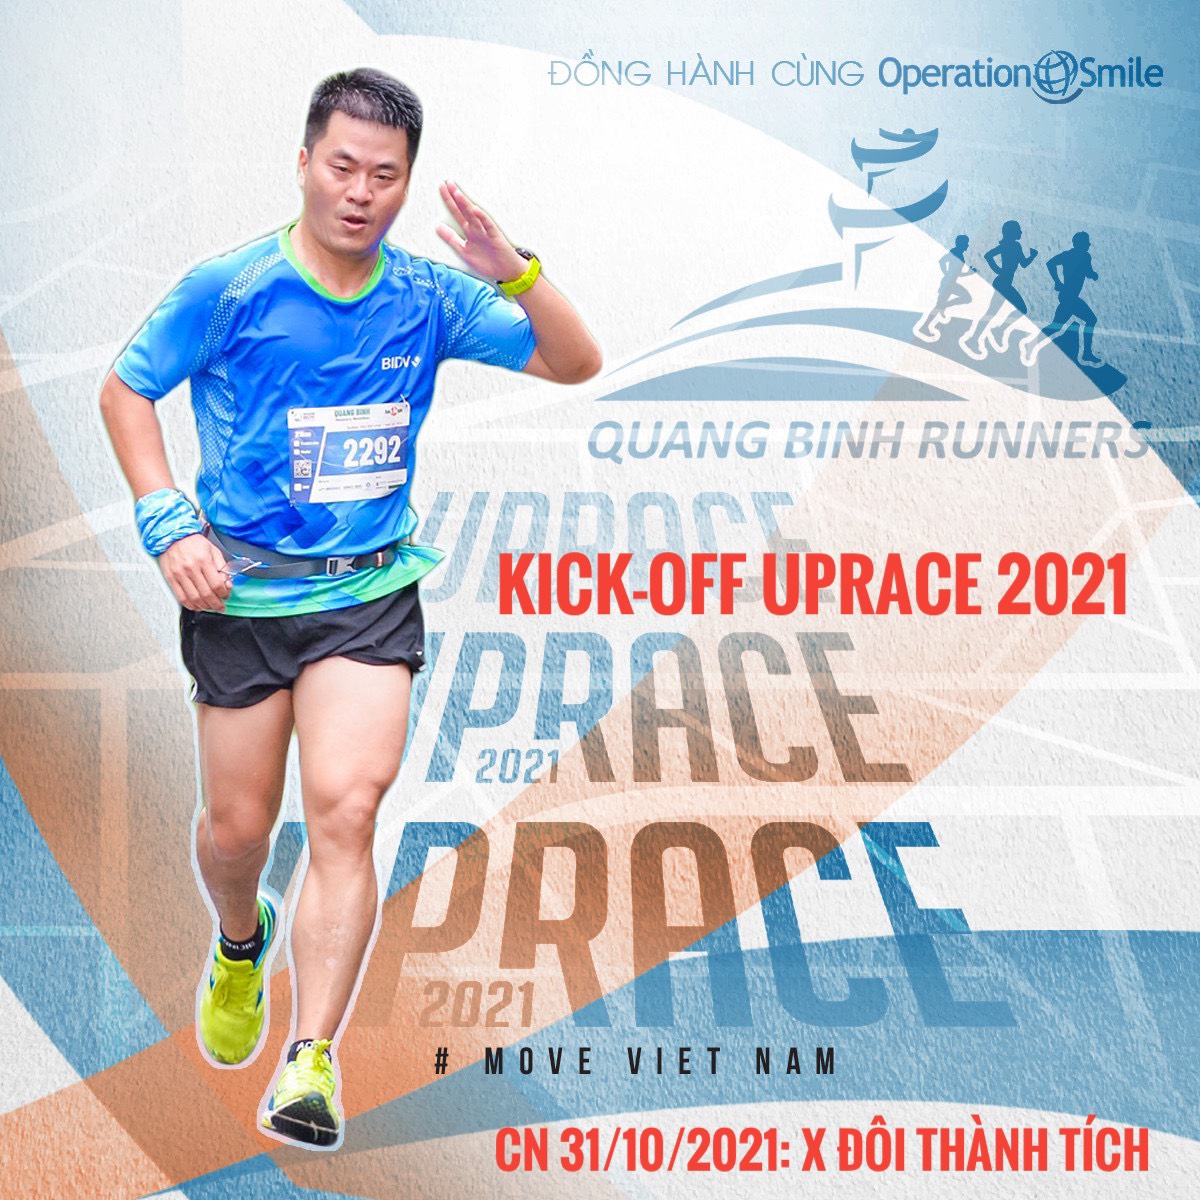 Quảng Bình Runners - KICK - OFF UPRACE 2021